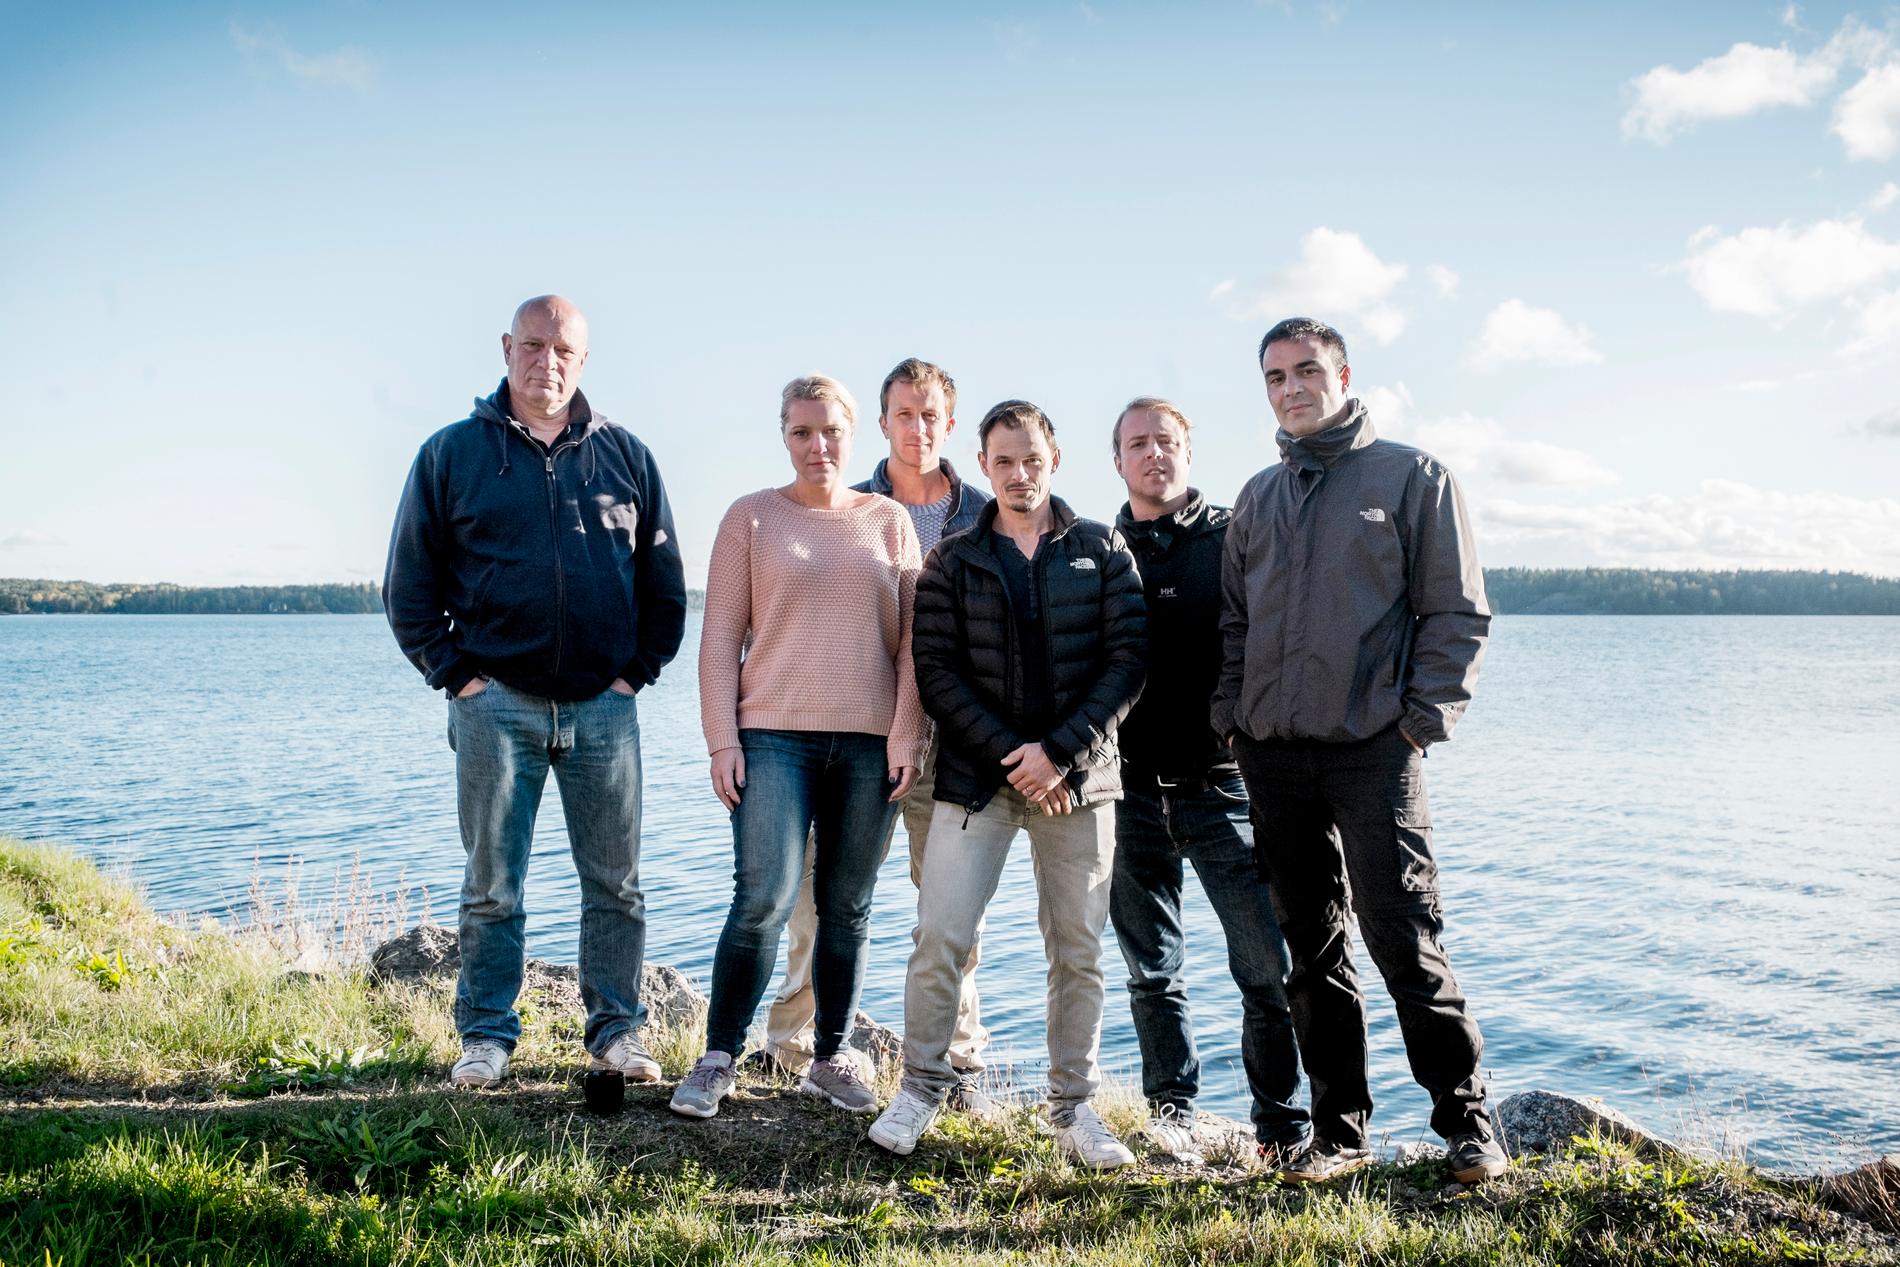 Aftonbladets team till Gula båtarna: Robert Aschberg, Carina Bergfeldt, Erik Wiman, Peter Wixtröm, Andreas Bardell och Kenan Habul.